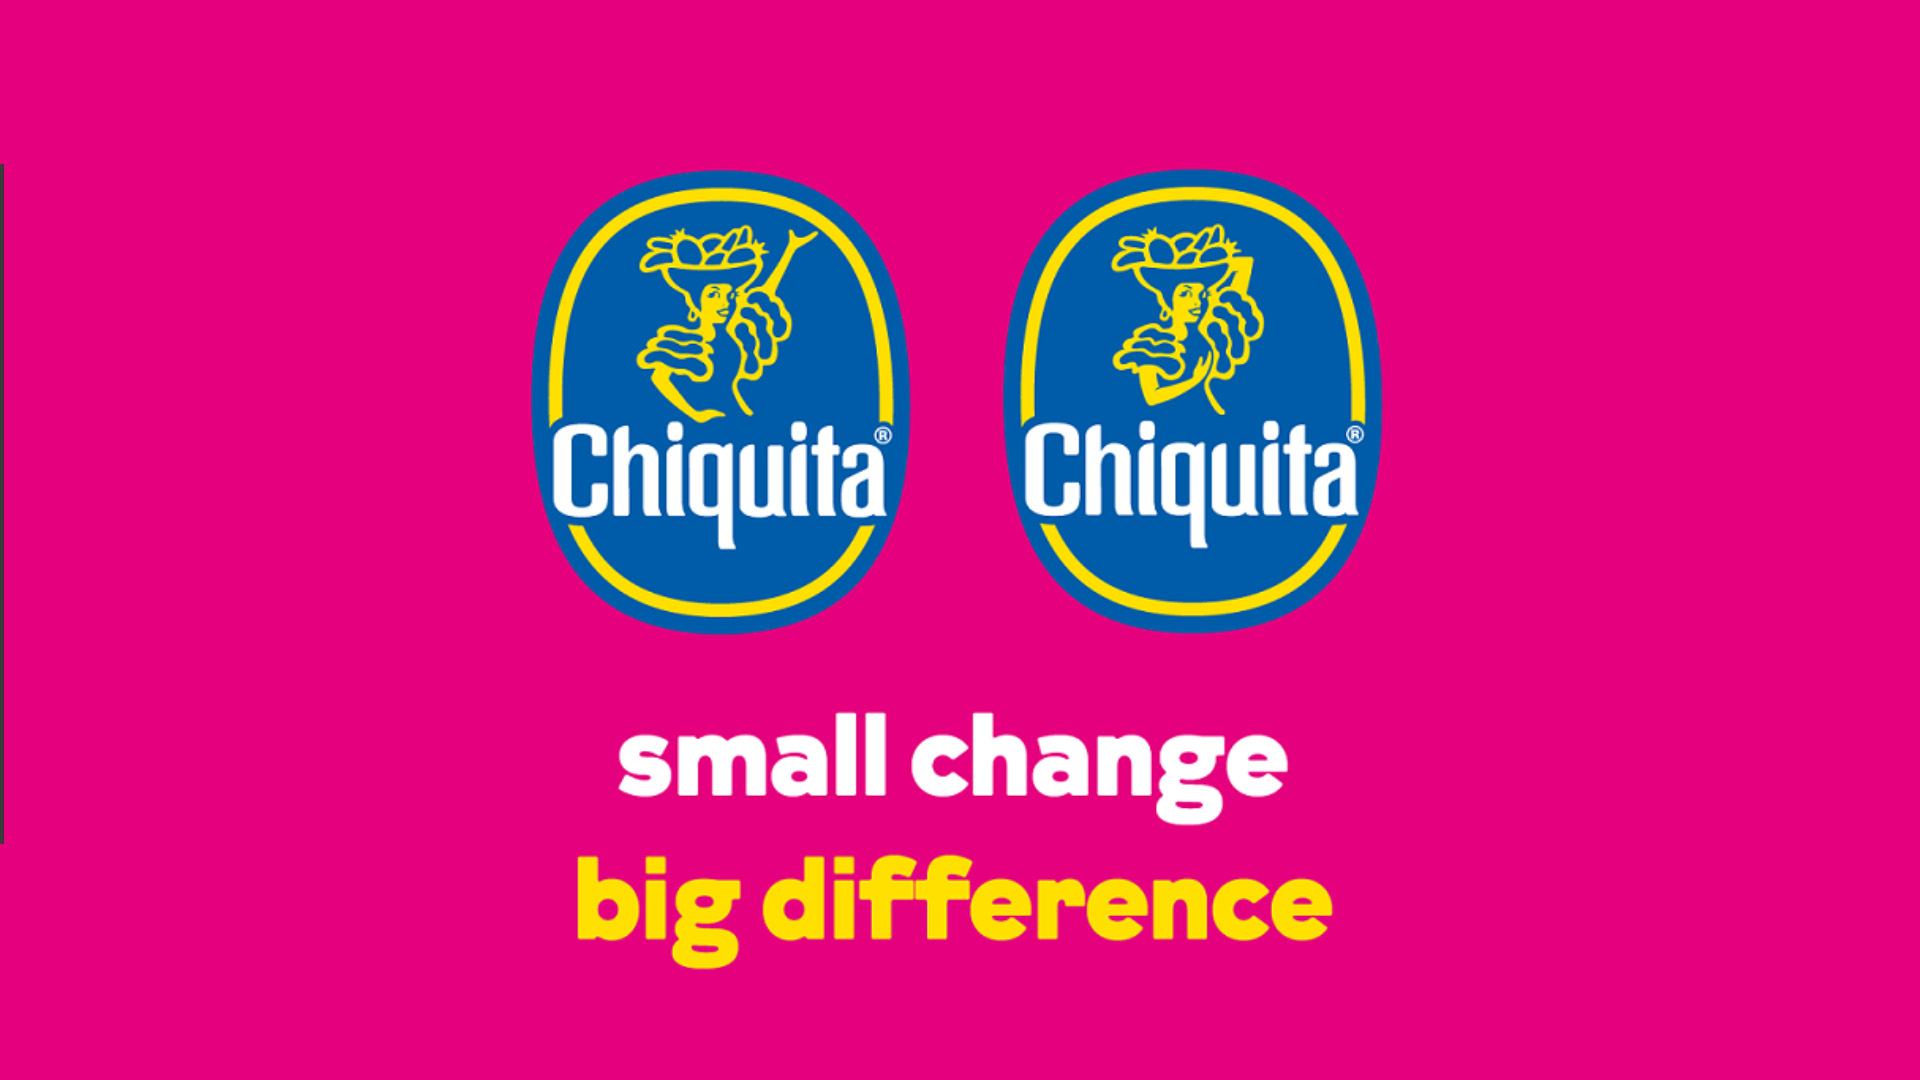 Miss Chiquita edukuje nt. raka piersi. Zmiany w logo